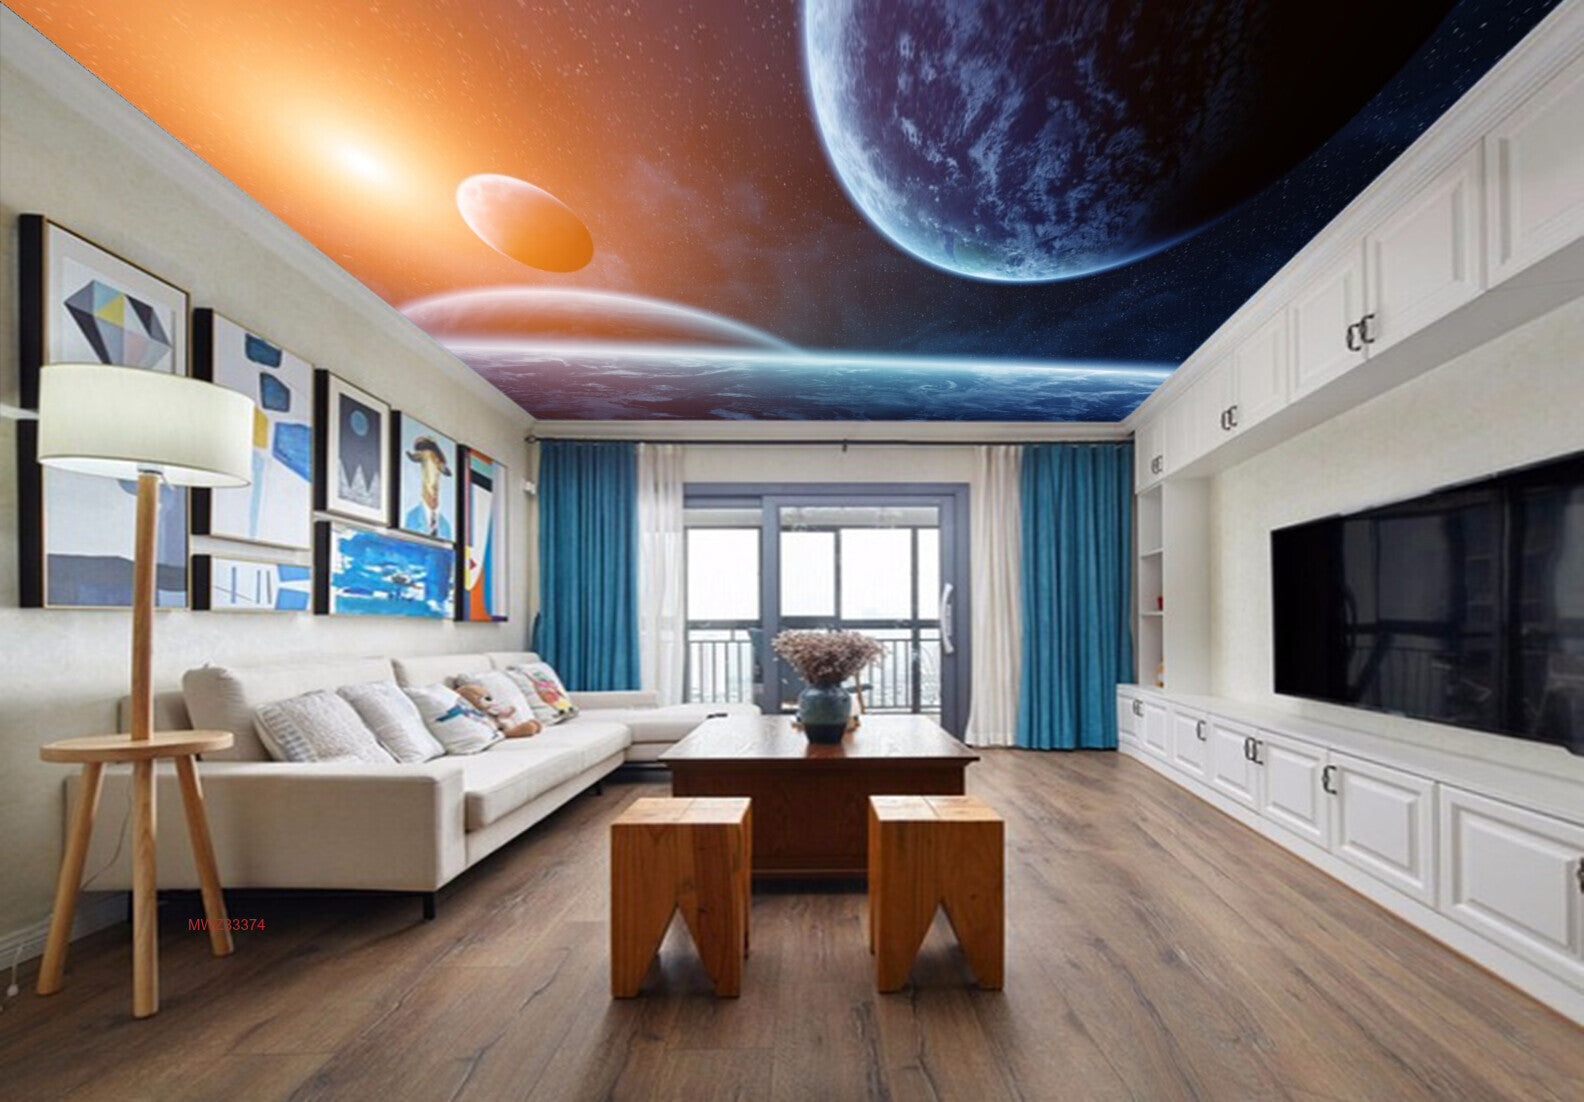 Avikalp MWZ3337 Earth Moon Sun HD Wallpaper for Ceiling